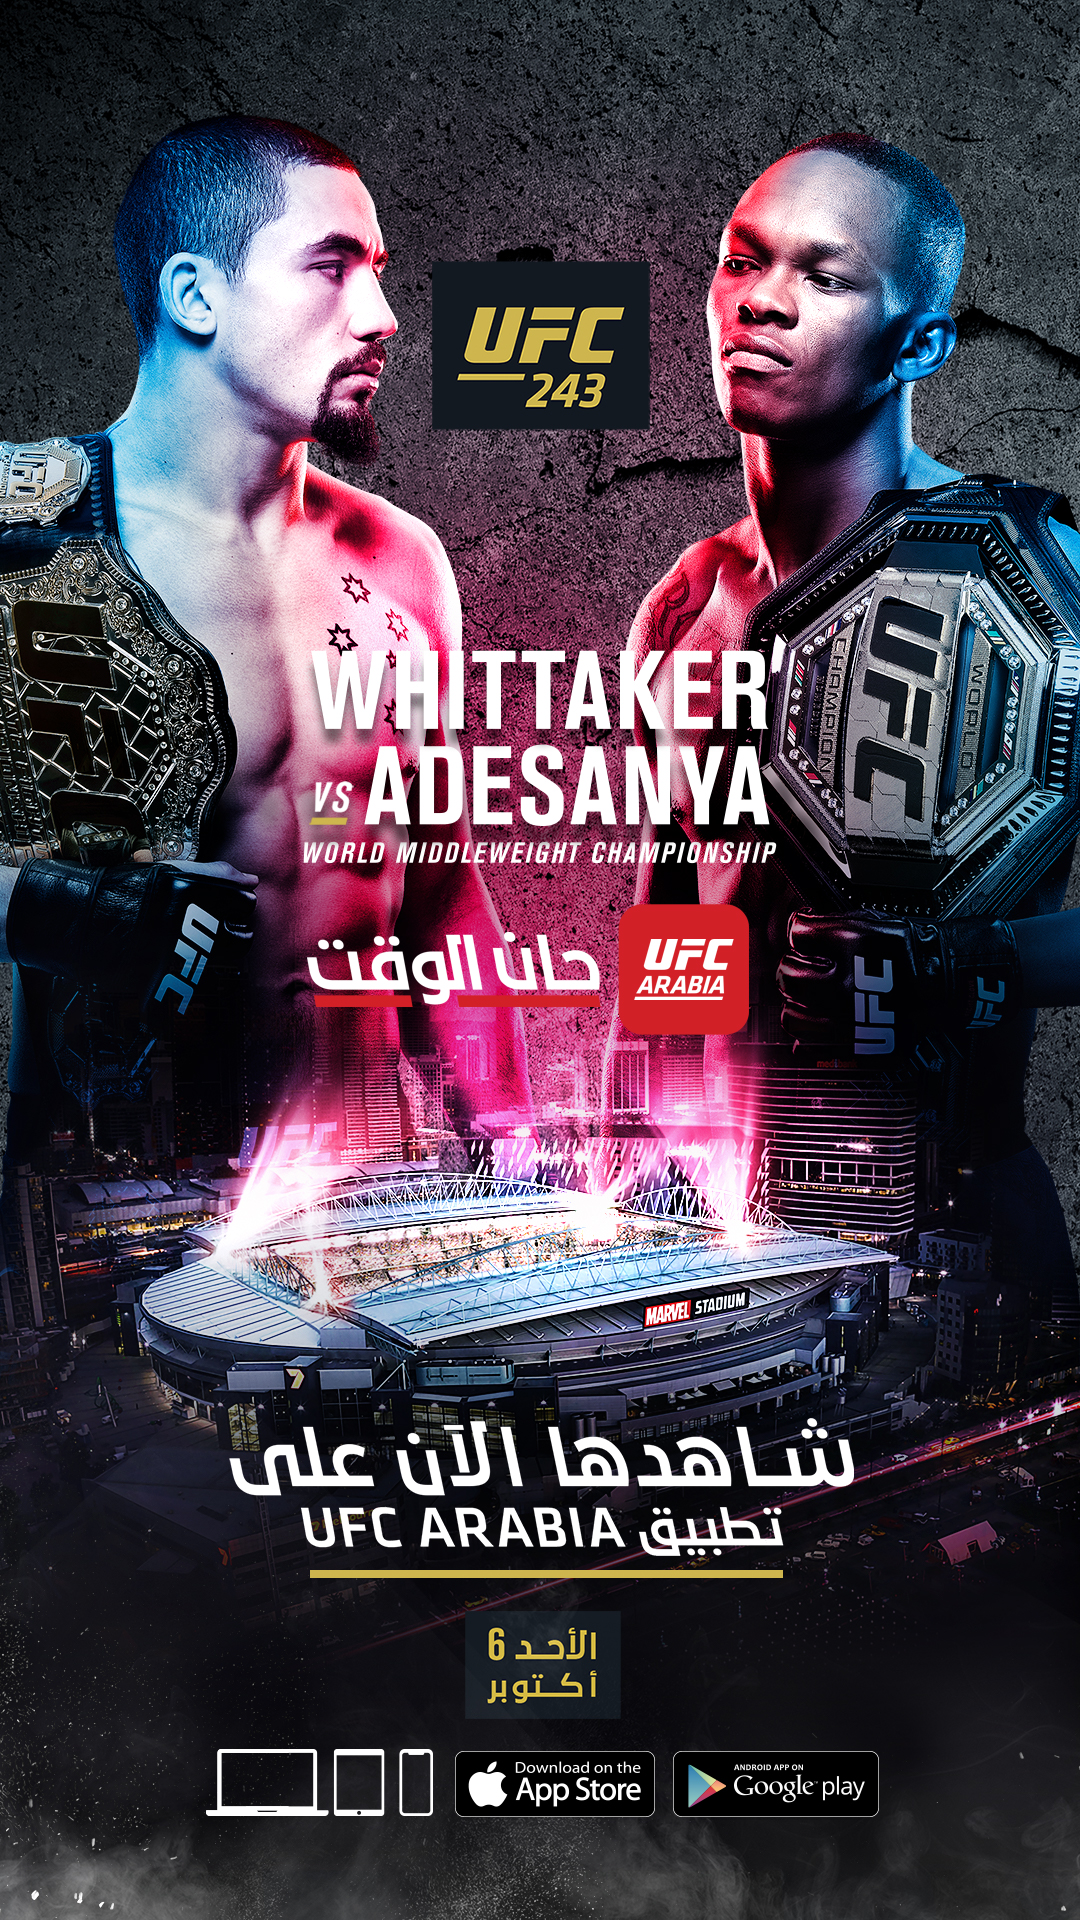 UFC Arabia – UFC 243